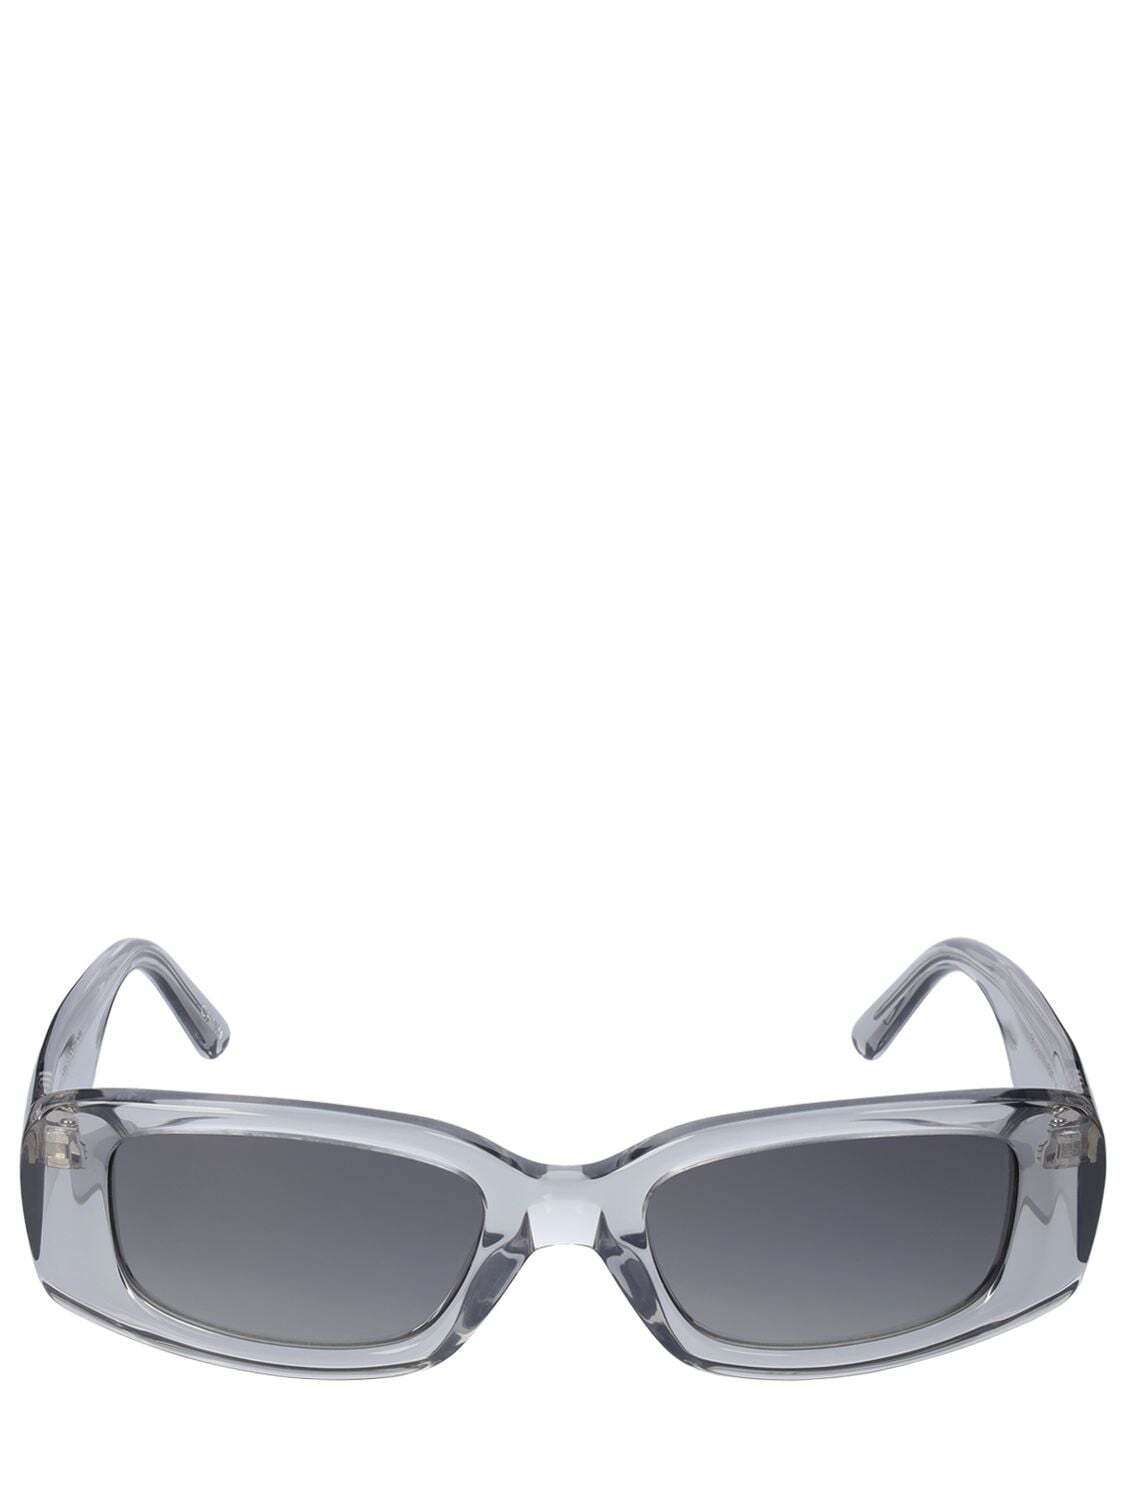 CHIMI 10.2 Squared Acetate Sunglasses in grey